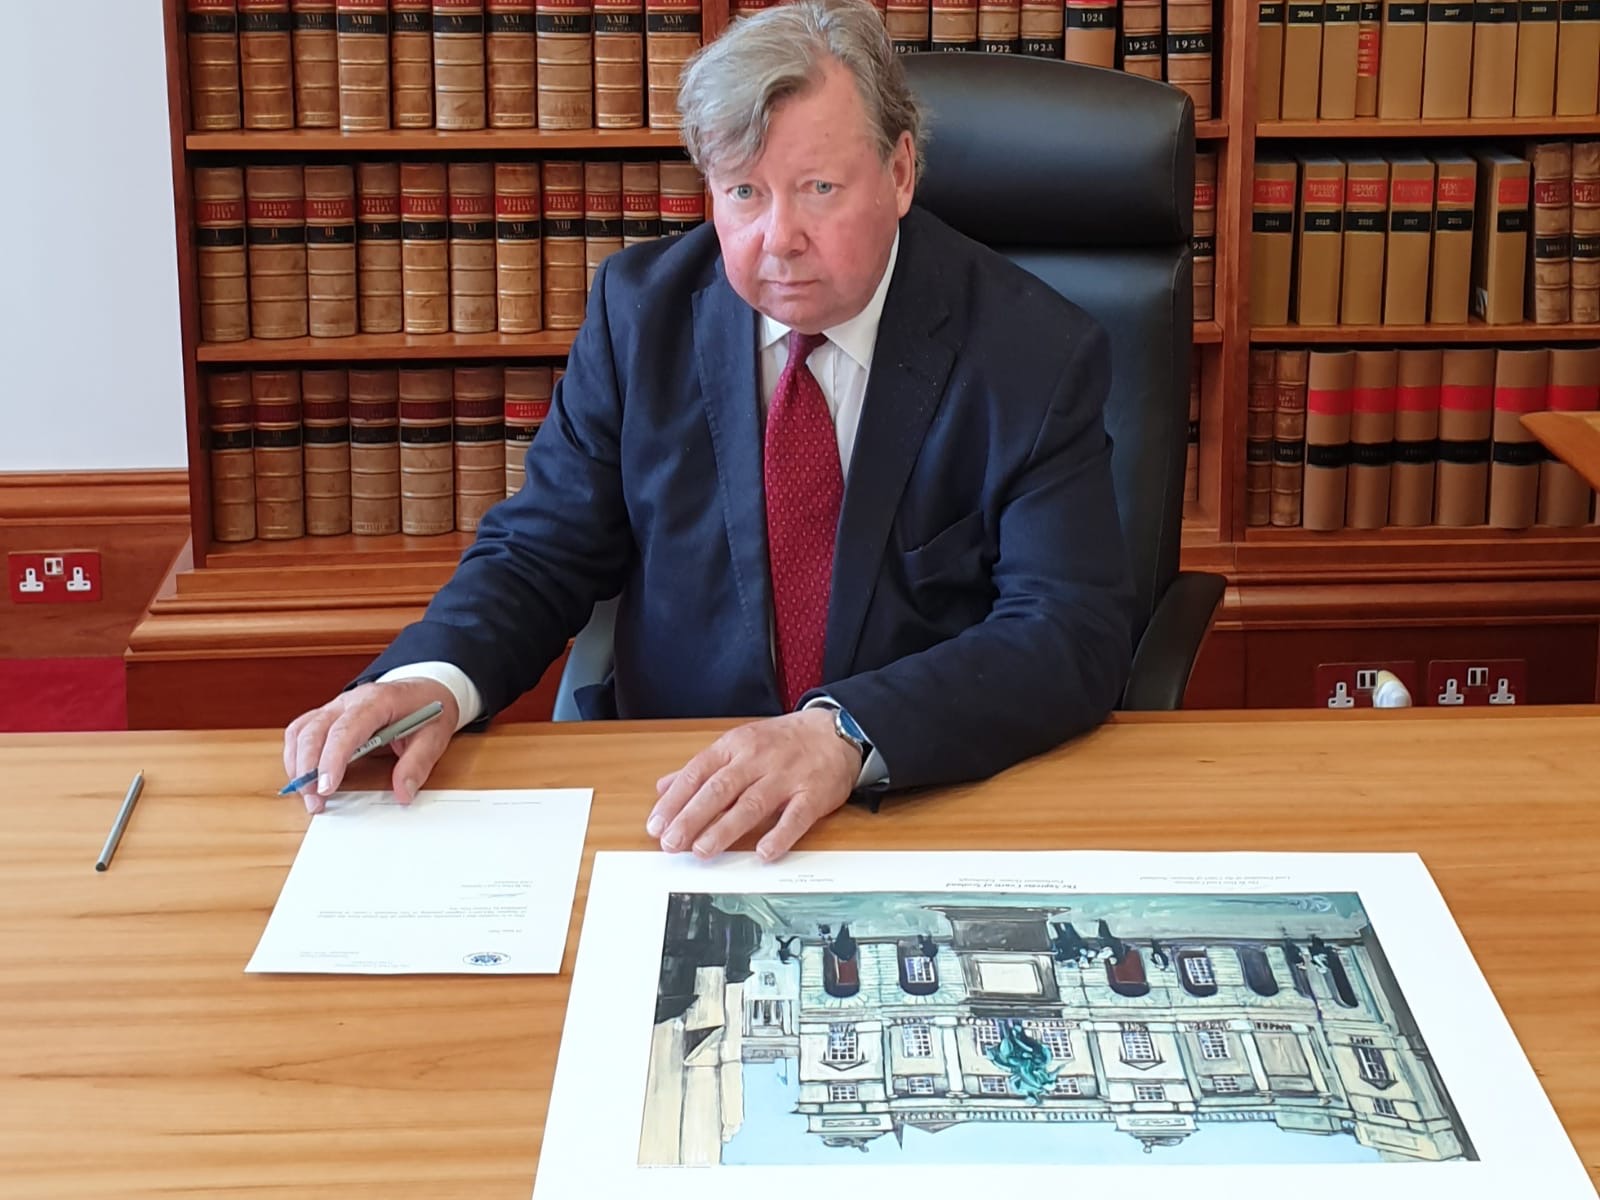 Rare legal prints aim to raise £25,000 for Lawscot Foundation